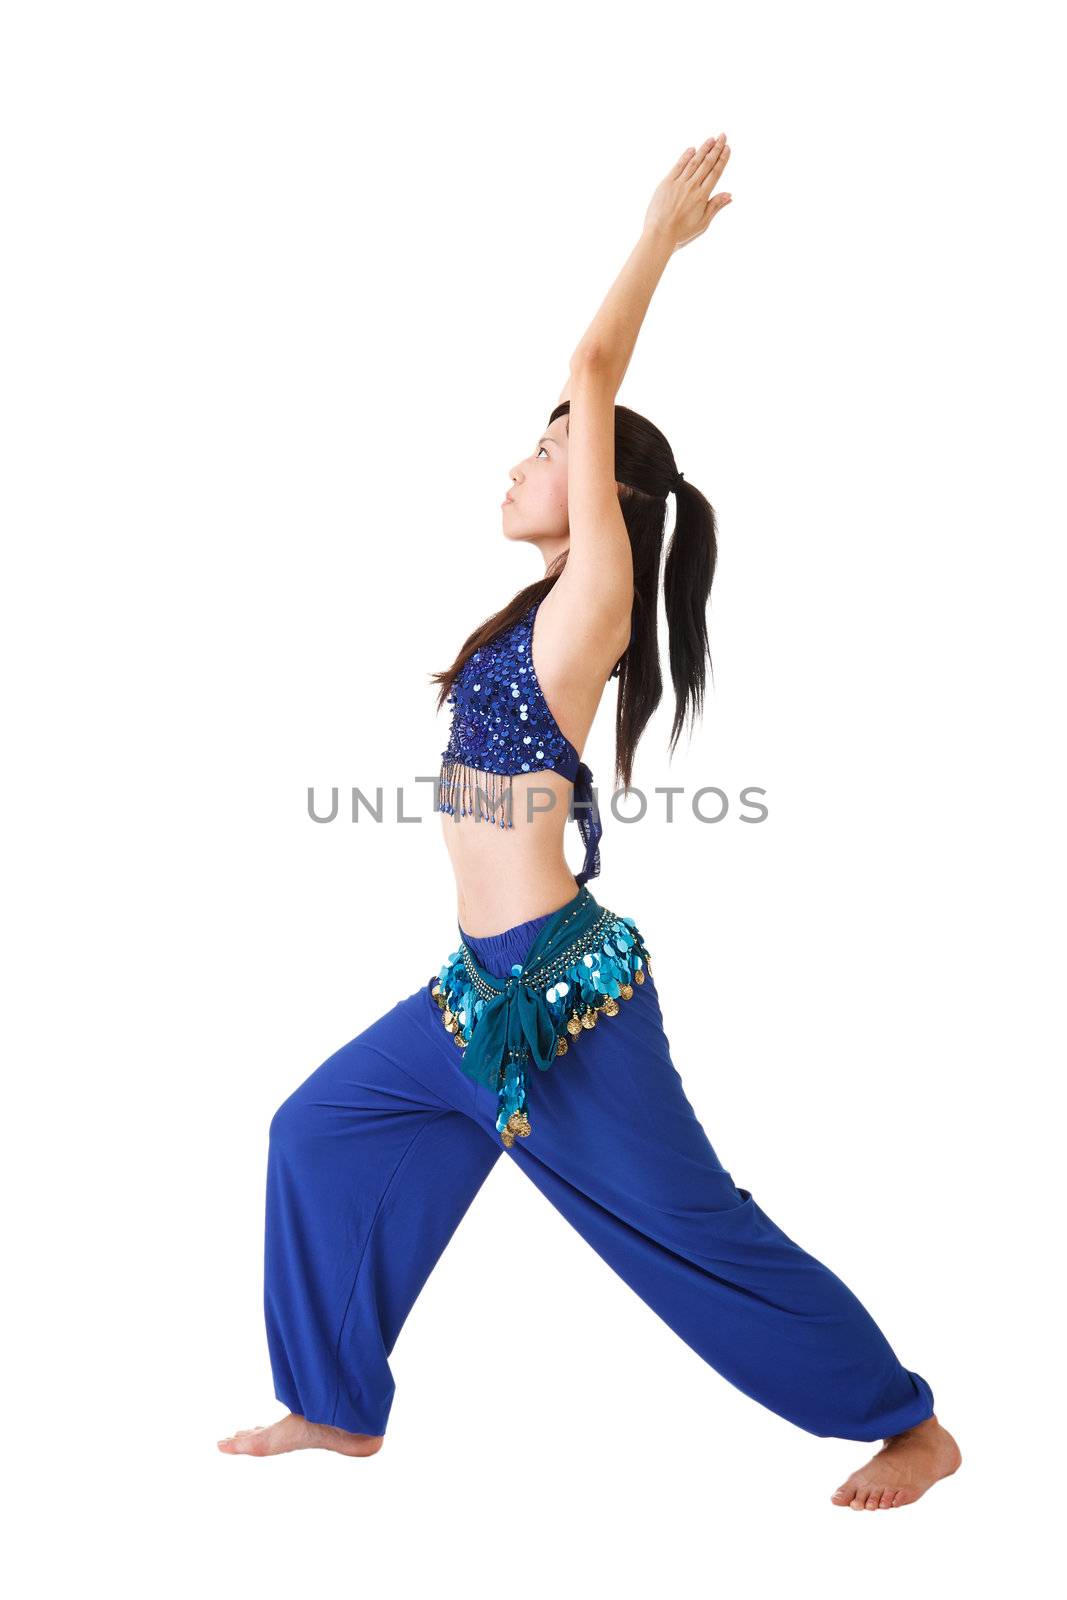 Yoga excising pose, full length portrait isolated on white.